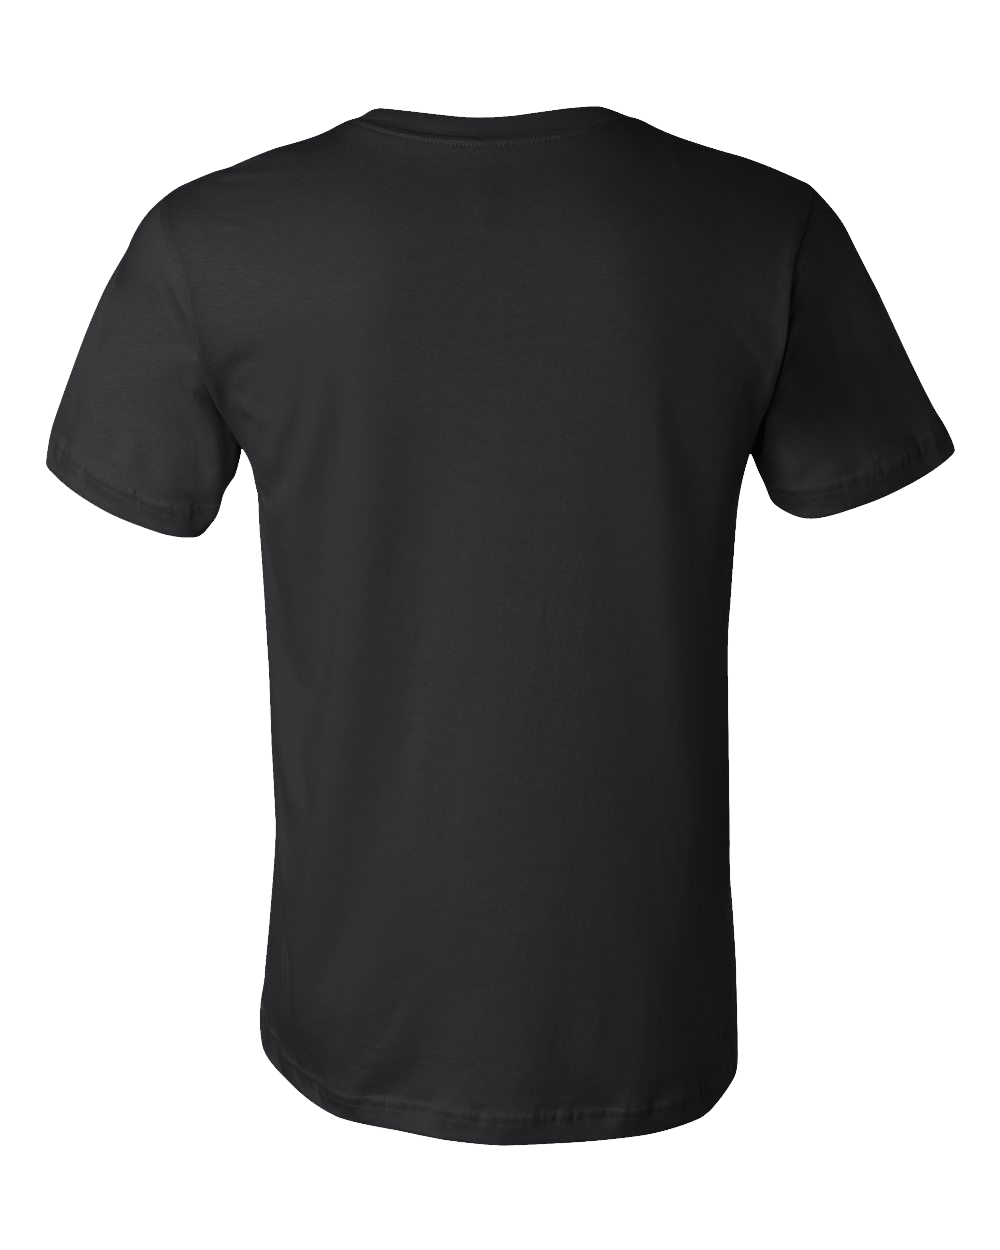 Standard Black Bald Knob, AR | Retro, Vintage Style Arkansas Pride  T-shirt